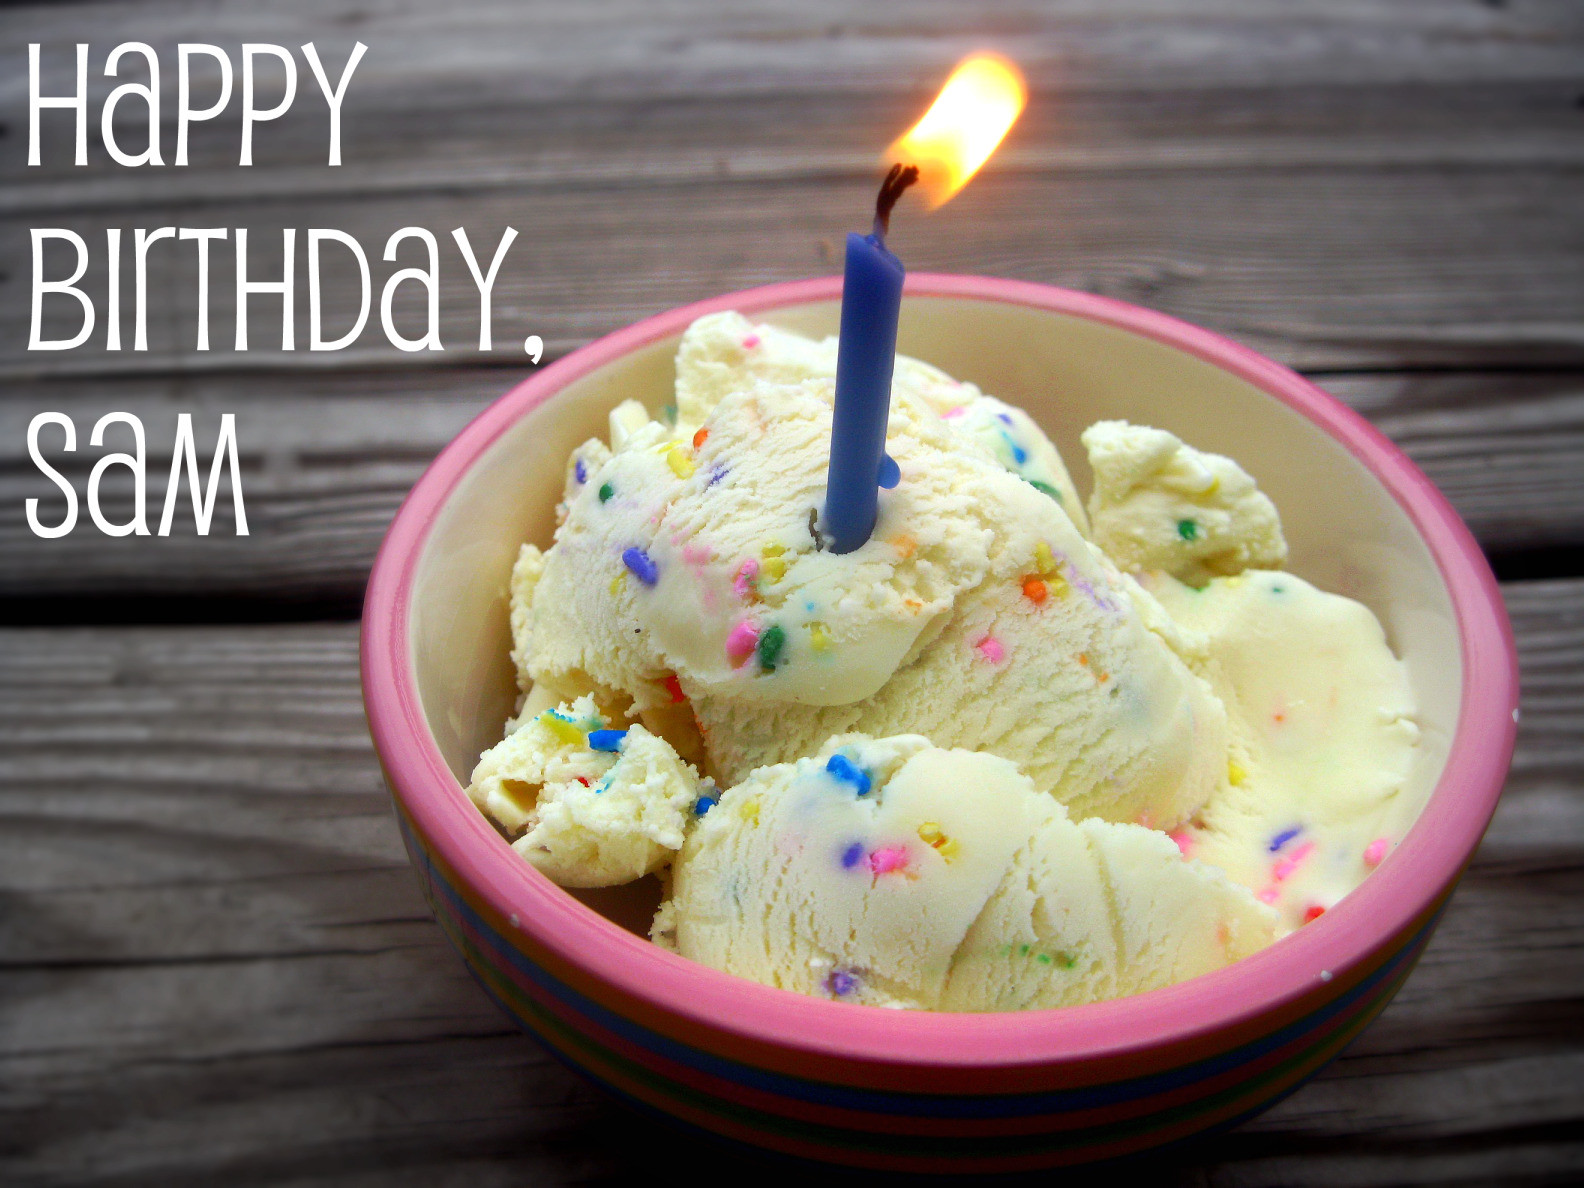 Best ideas about Ice Cream Birthday Cake
. Save or Pin Birthday cake ice cream Now.